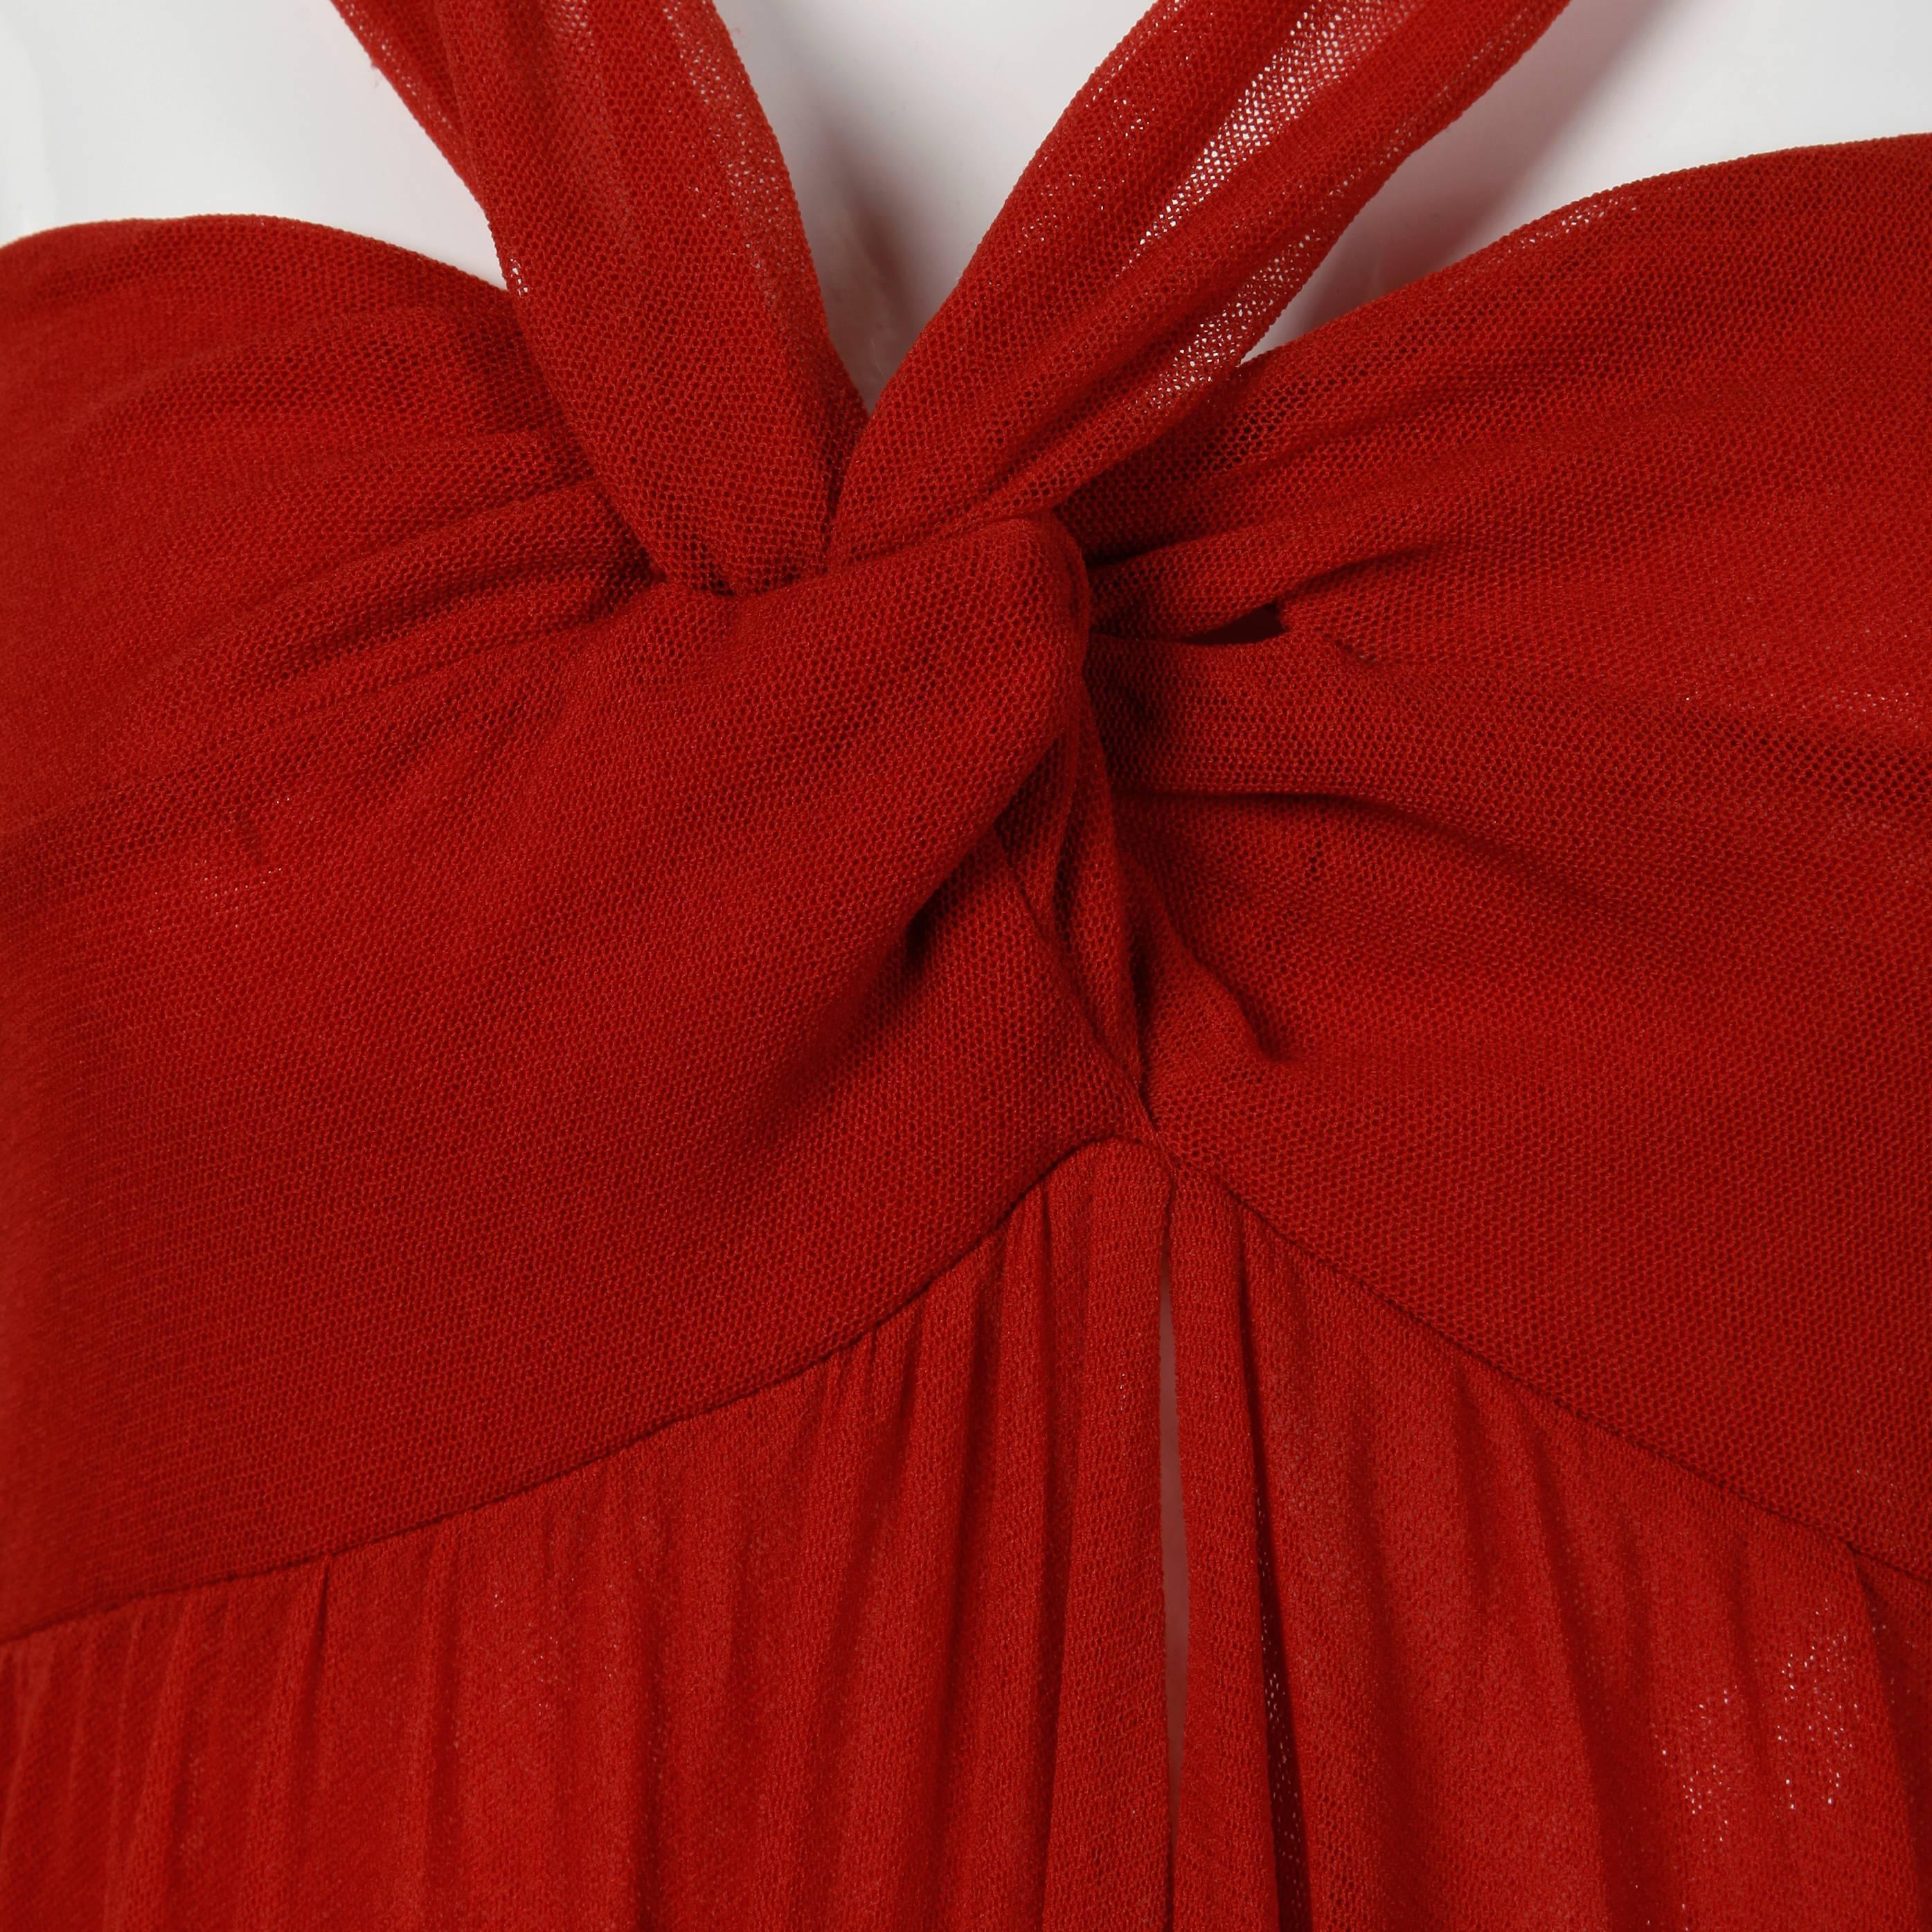 Jean Paul Gaultier Brick Red Mesh Dress with Ruffled Hemline 2